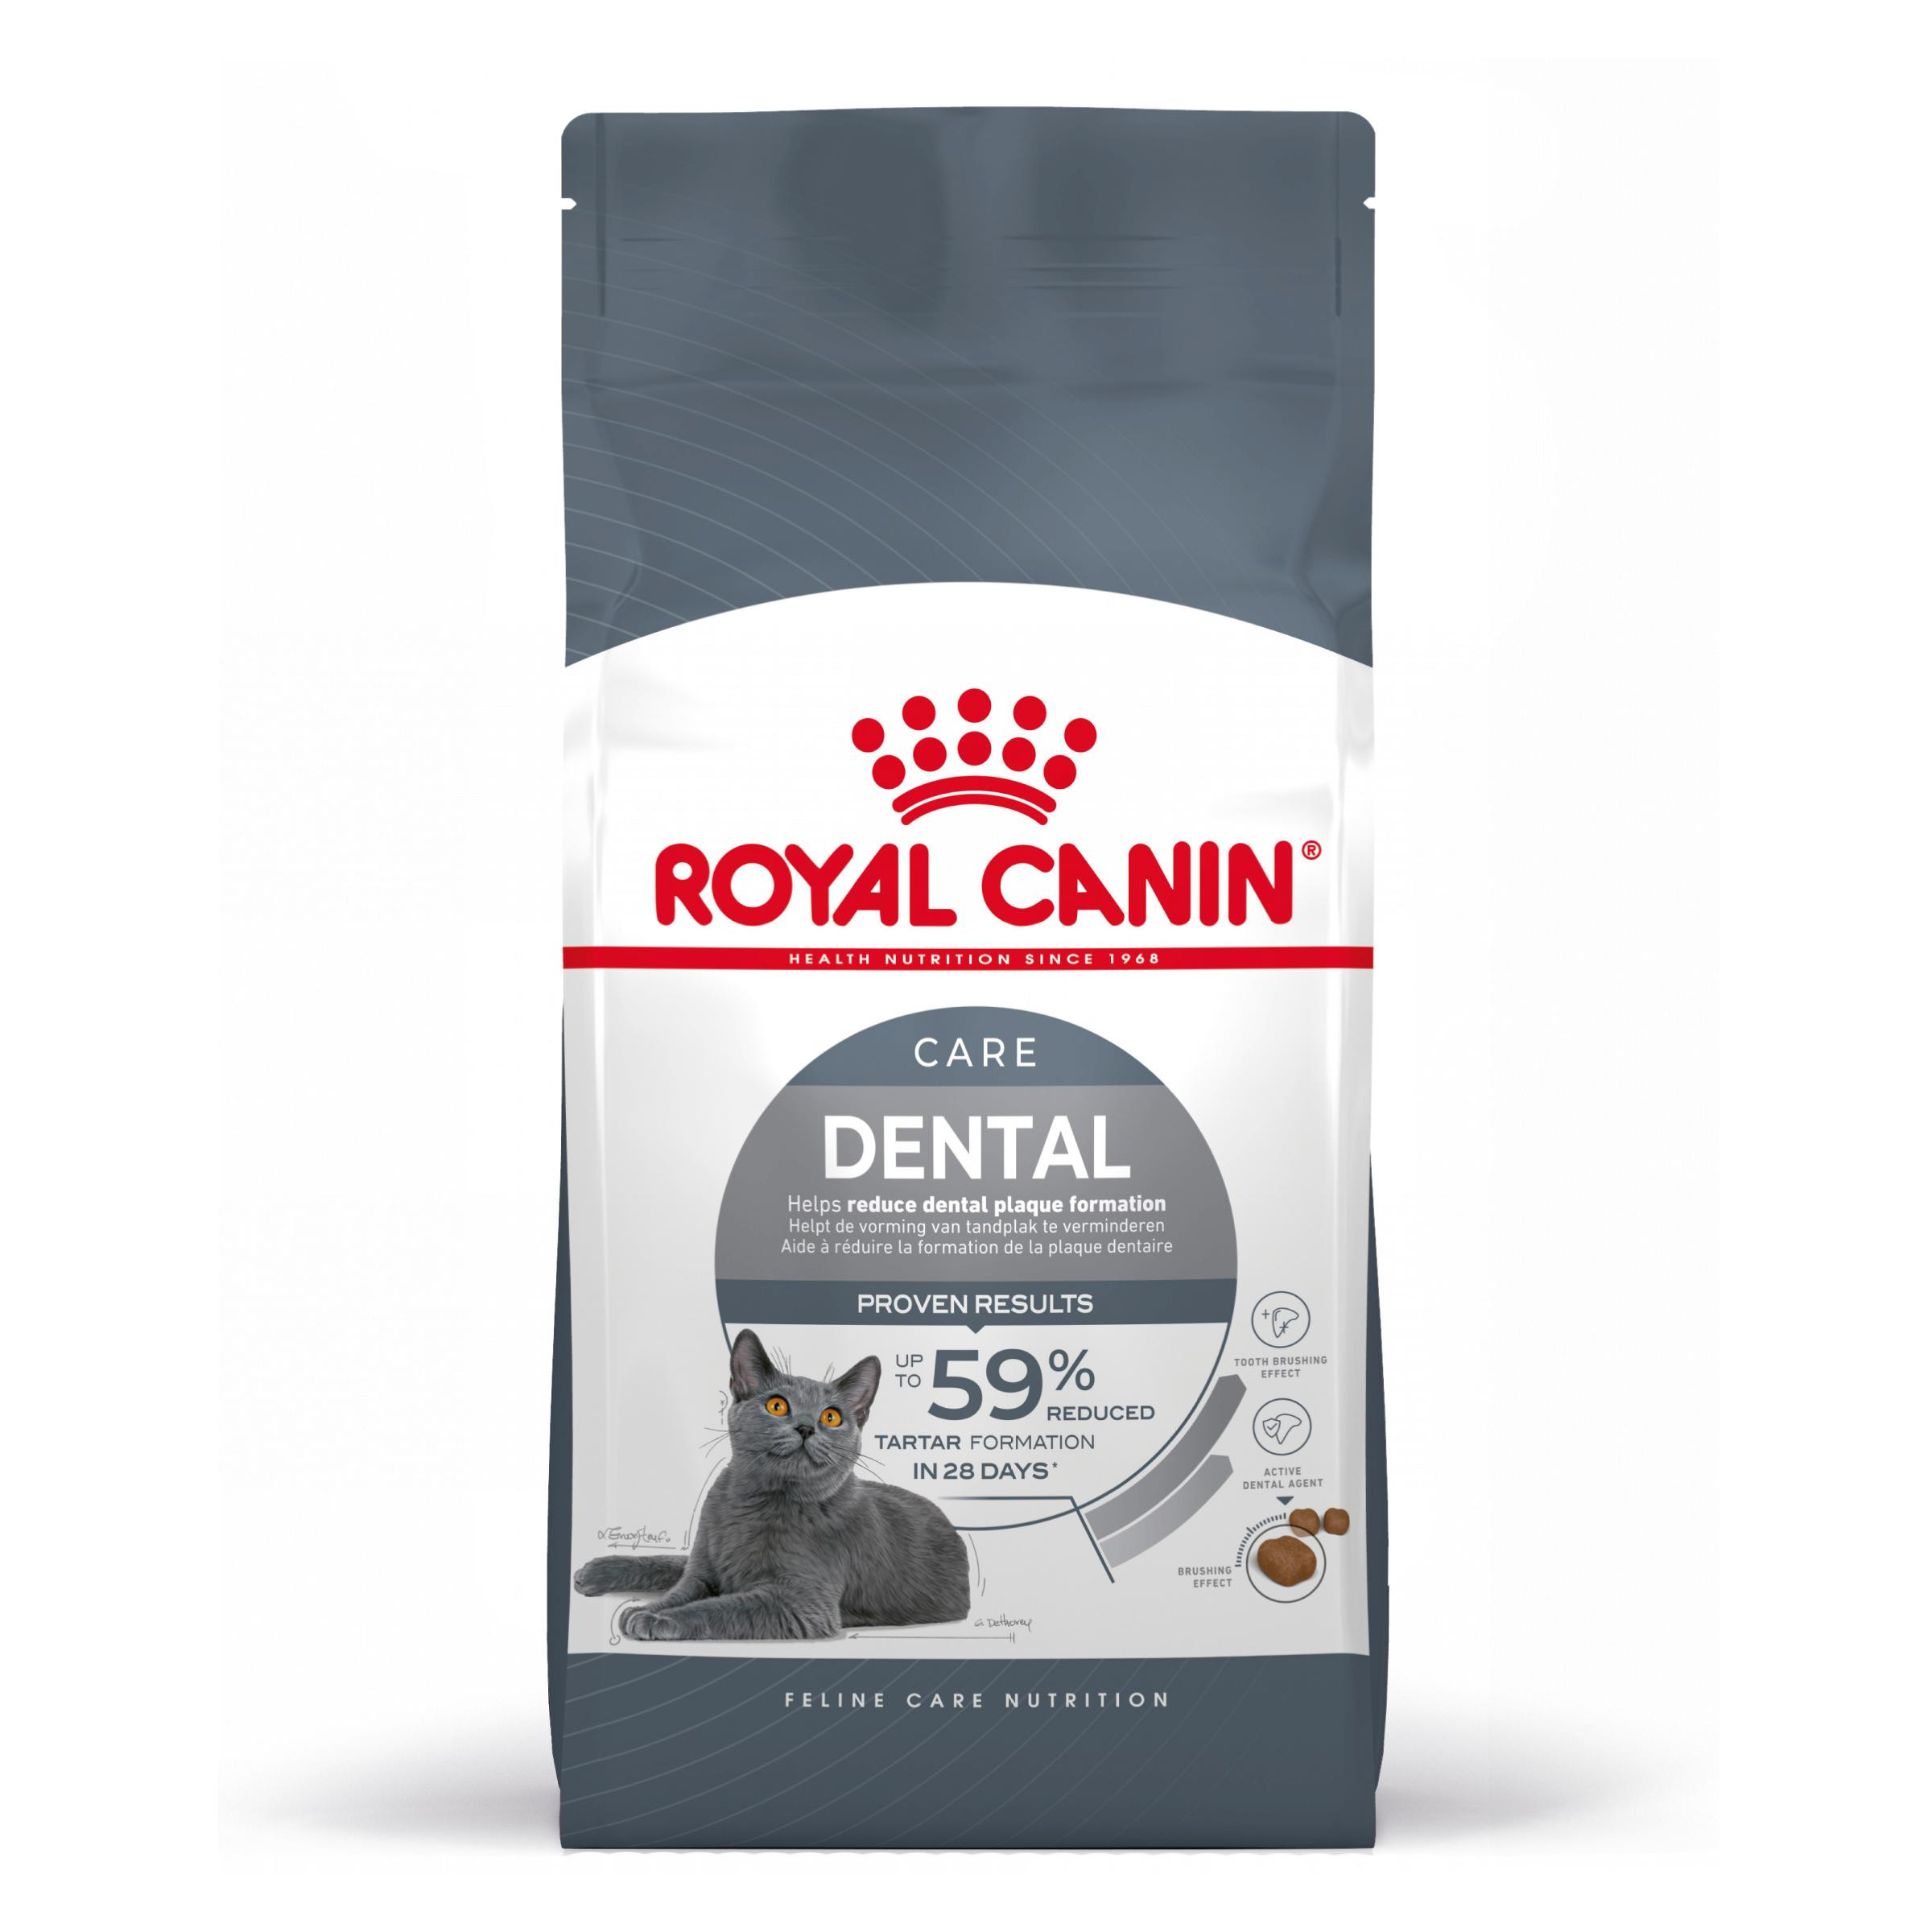 Royal Canin Dental Care kattfoder